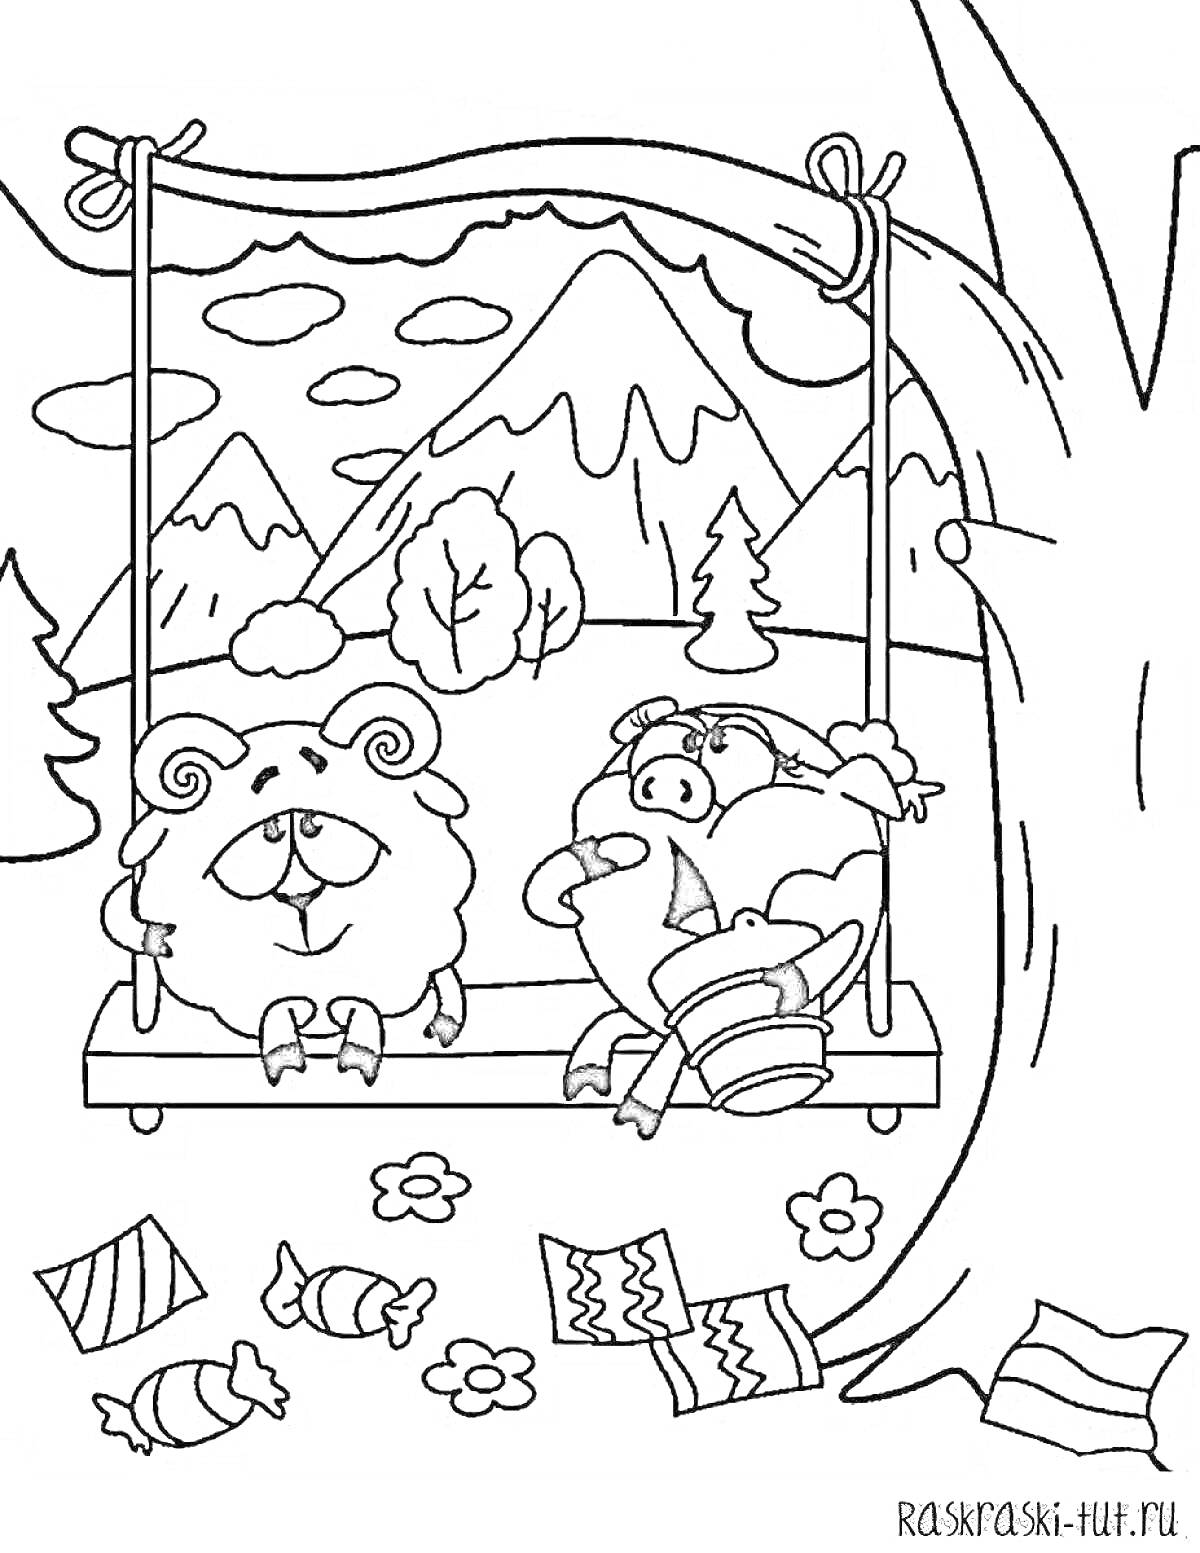 РаскраскаБараш и Нюша на качелях на фоне гор, дерева и конфетами